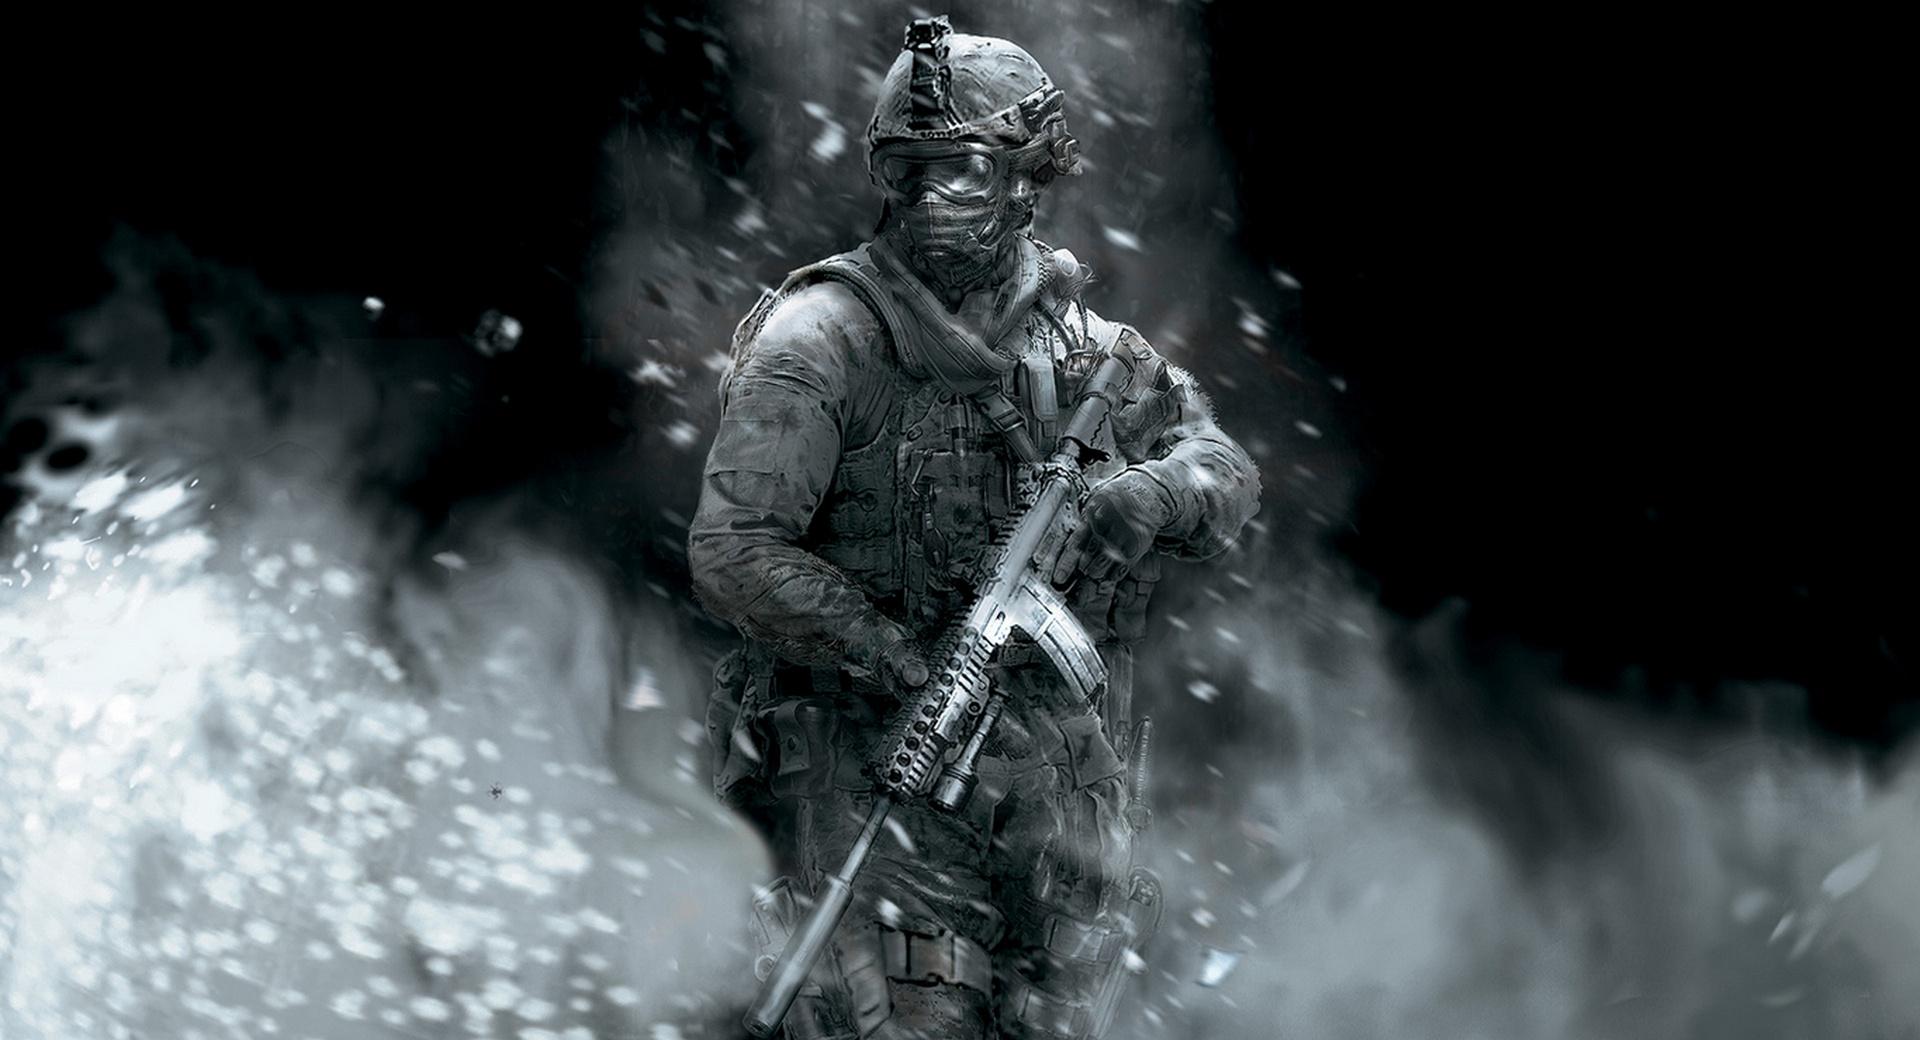 Call Of Duty Modern Warfare 3 at 1024 x 1024 iPad size wallpapers HD quality